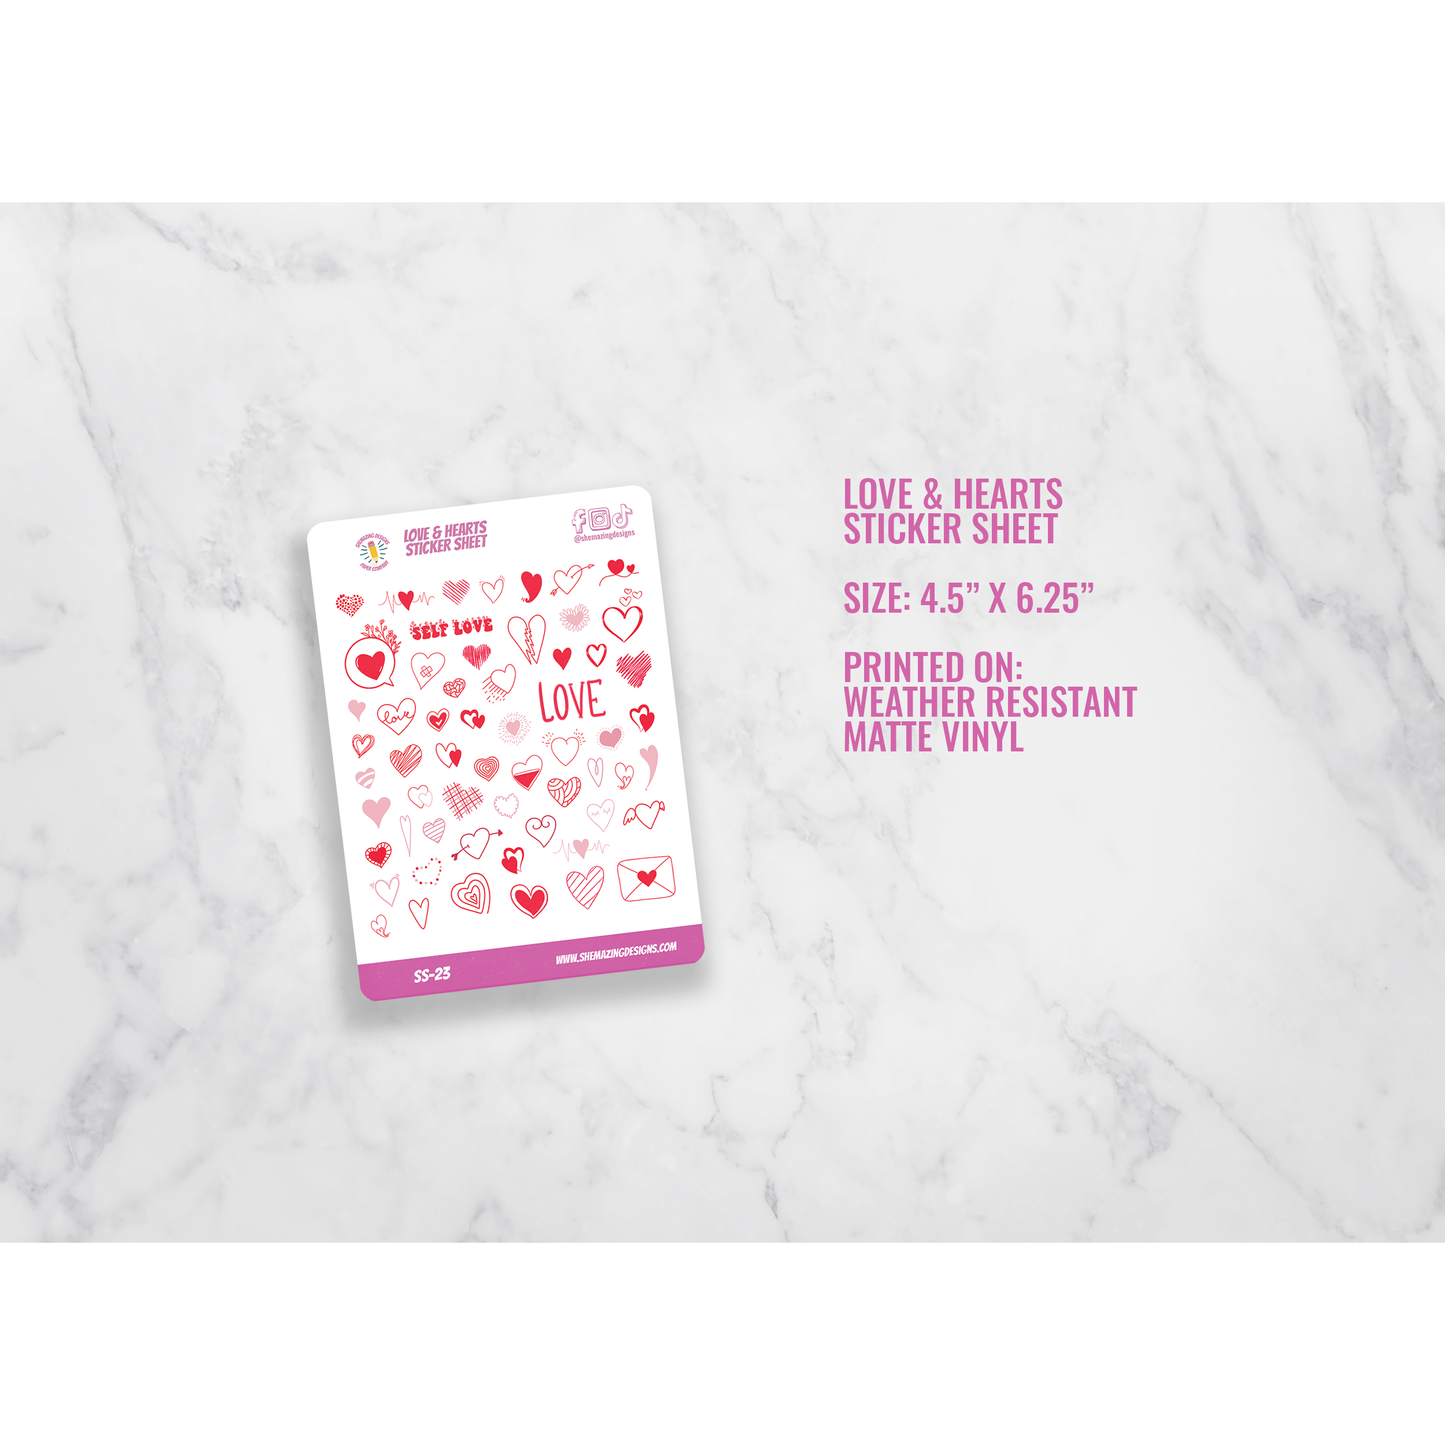 Love & Hearts Sticker Sheet